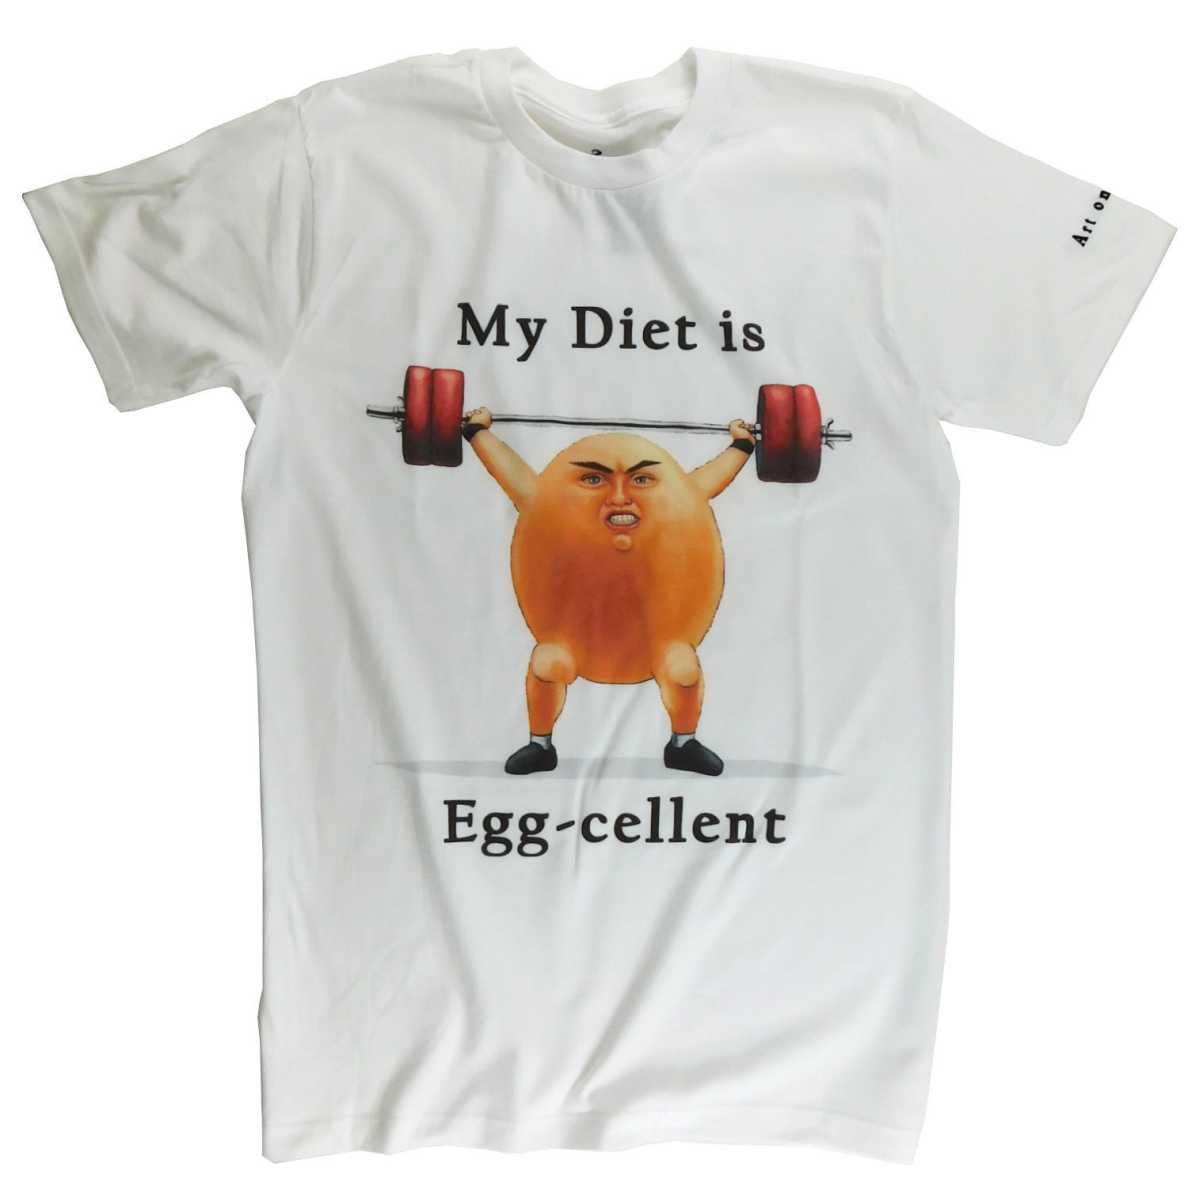 My Diet is Egg-Cellent - An Eating Habit T-Shirt